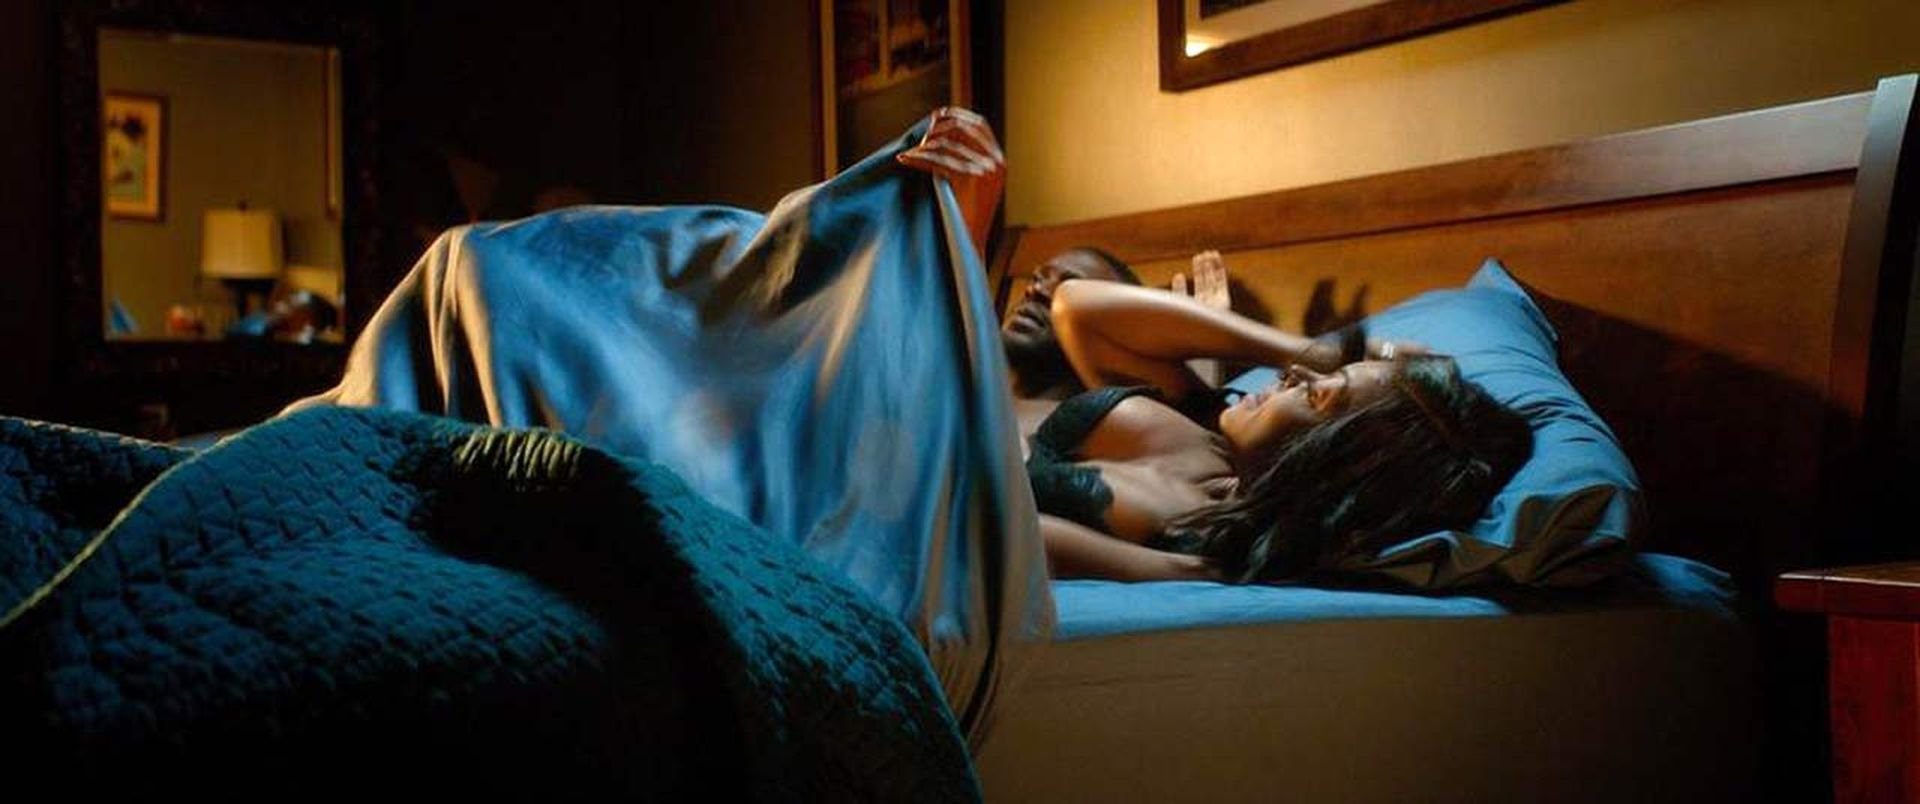 Taraji P. Henson Nude  - What Men Want (8 Pics + GIFs & Video)